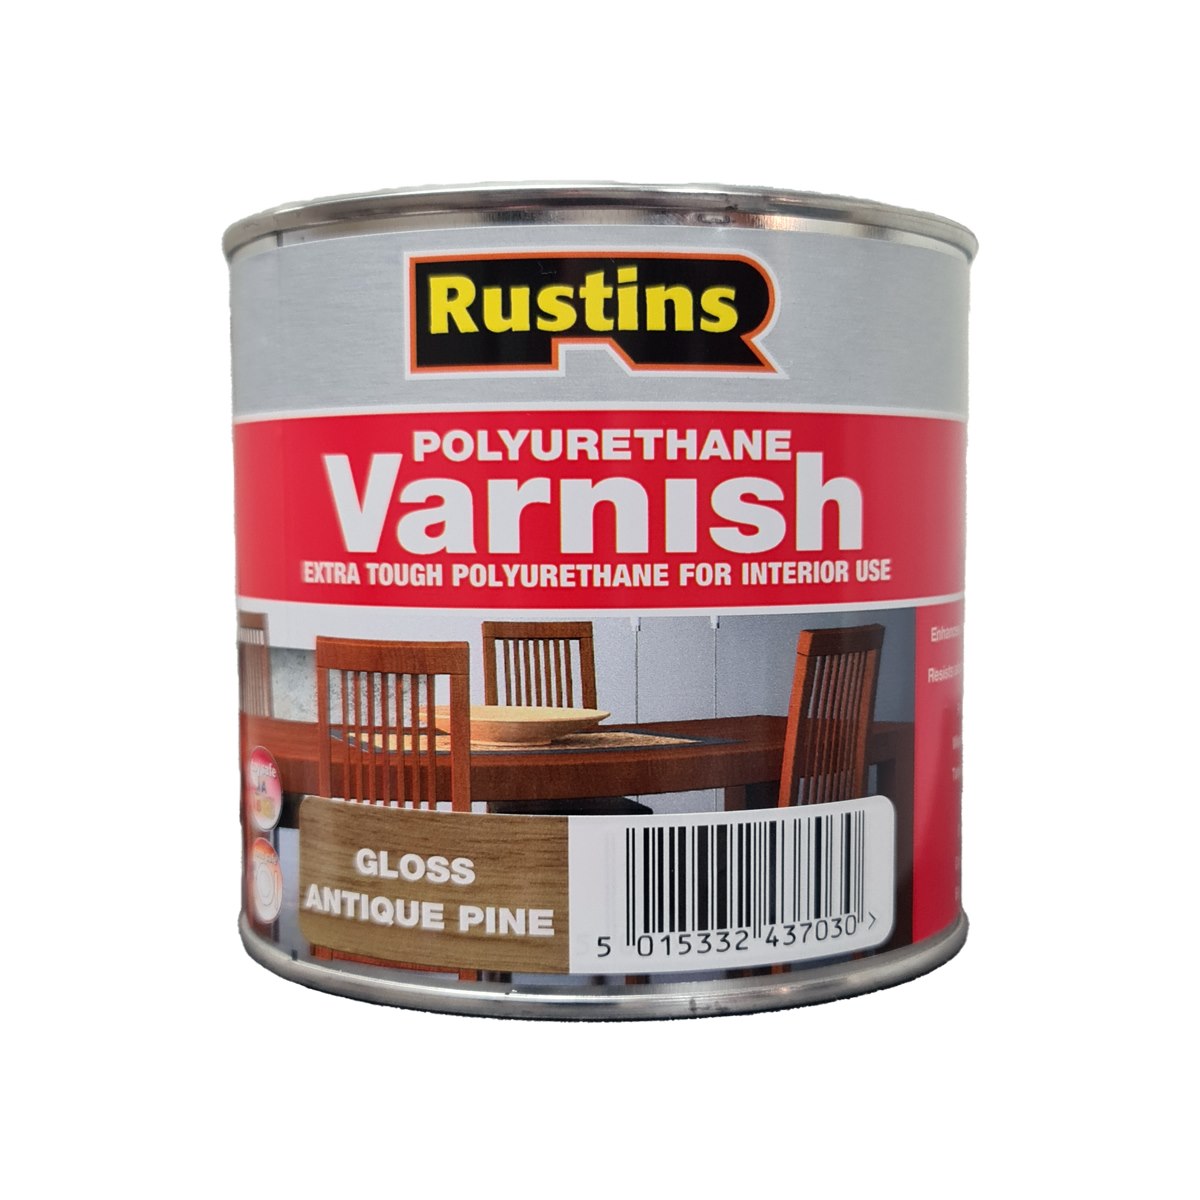 Rustins Polyurethane Varnish Gloss Antique Pine 500ml